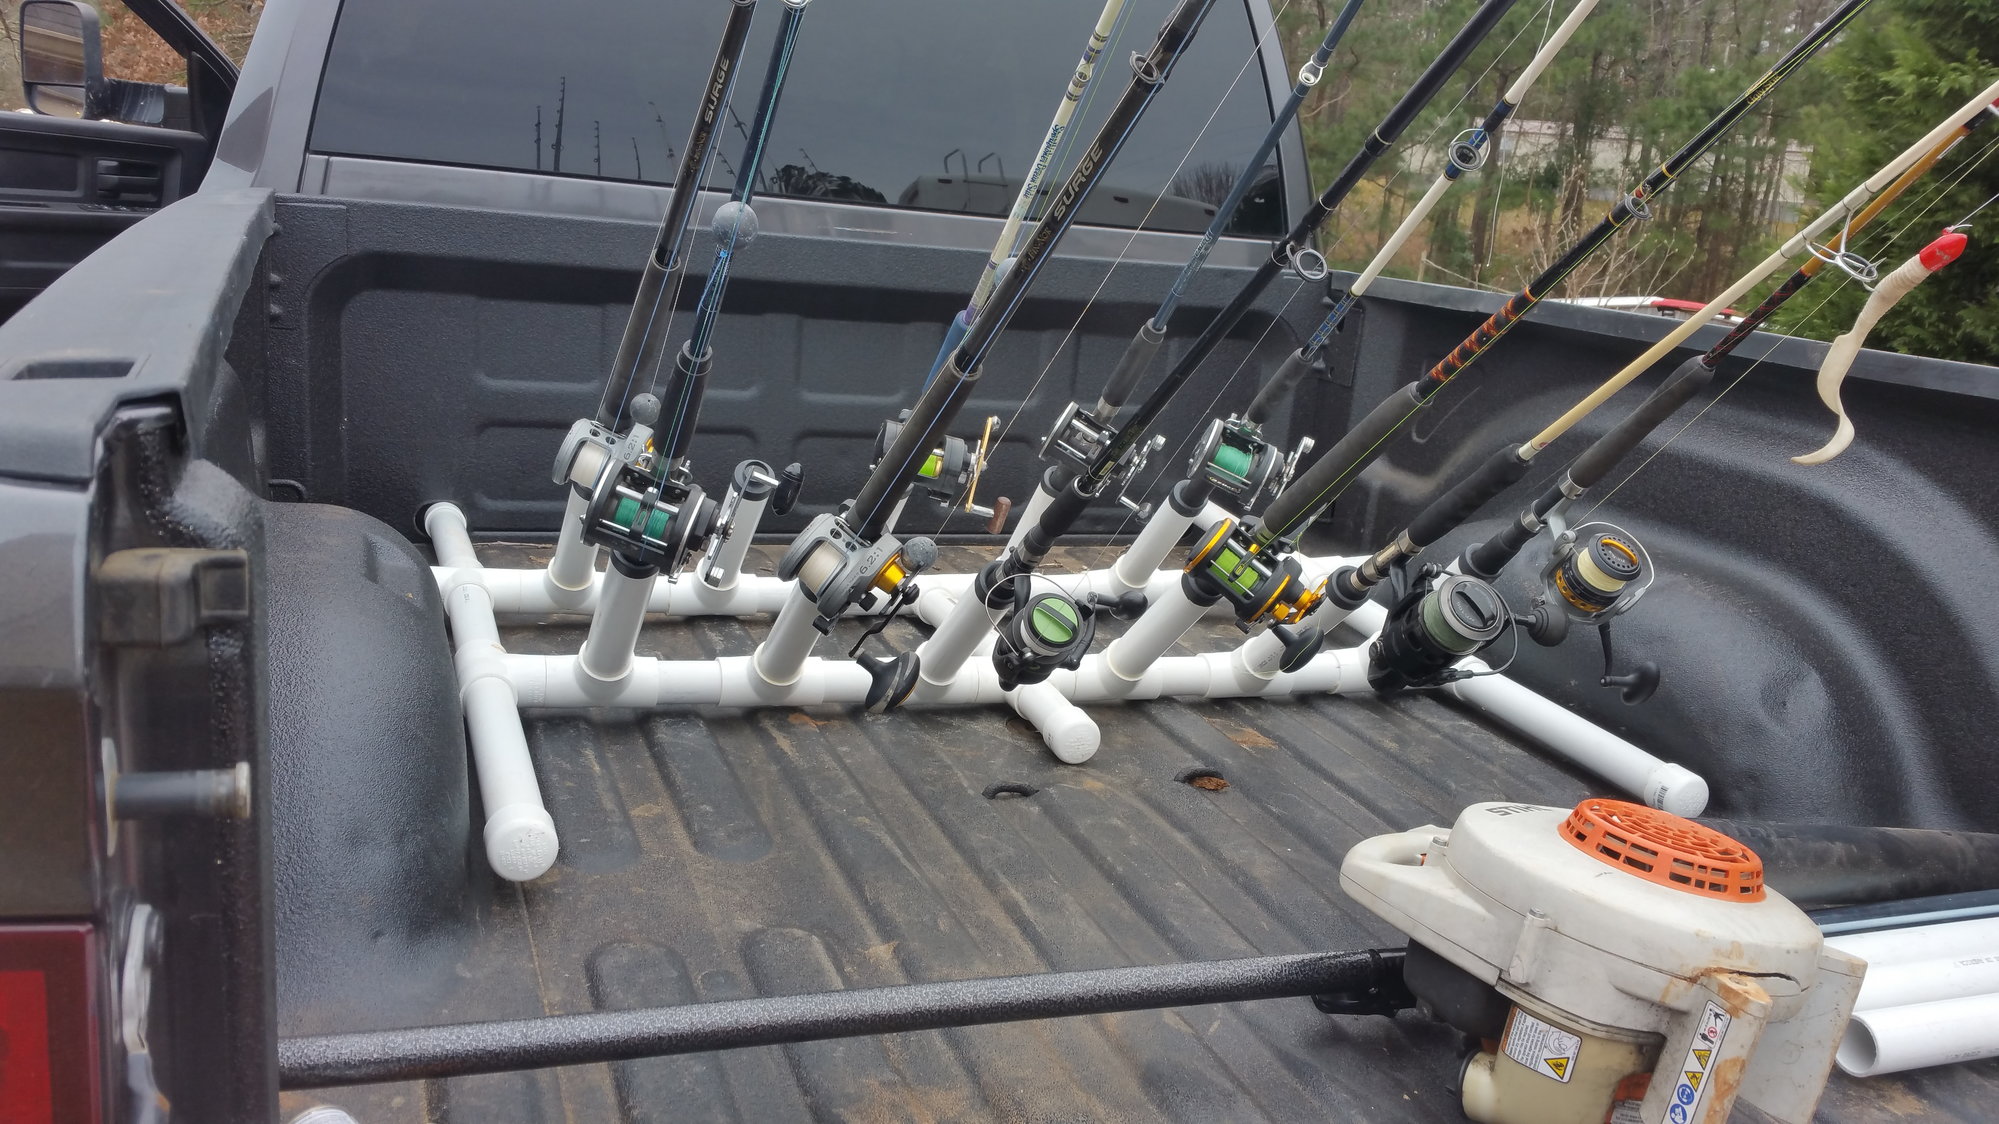 404 Not Found  Fishing rod storage, Pvc fishing rod holder, Fishing pole  storage